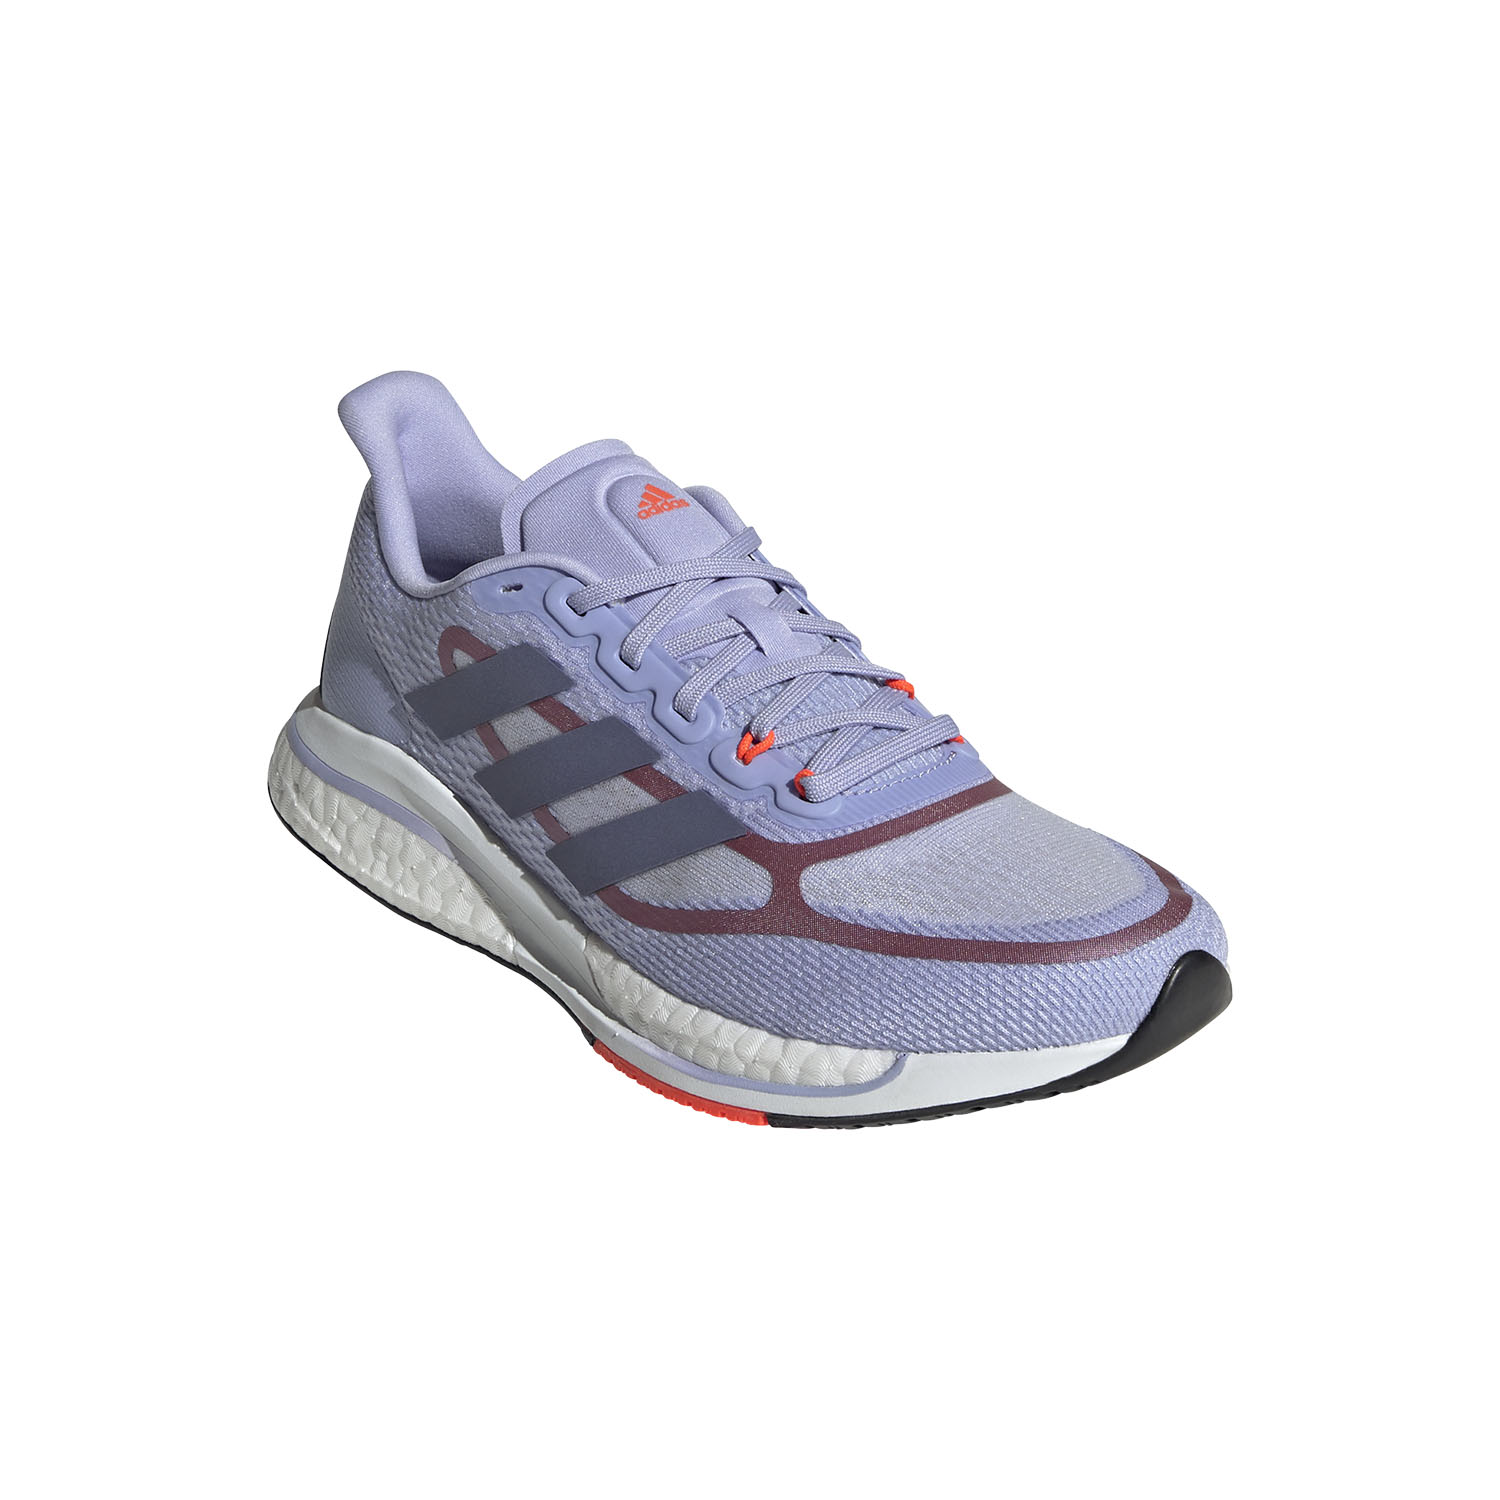 adidas Supernova + Women's Running Shoes - Violet Tone